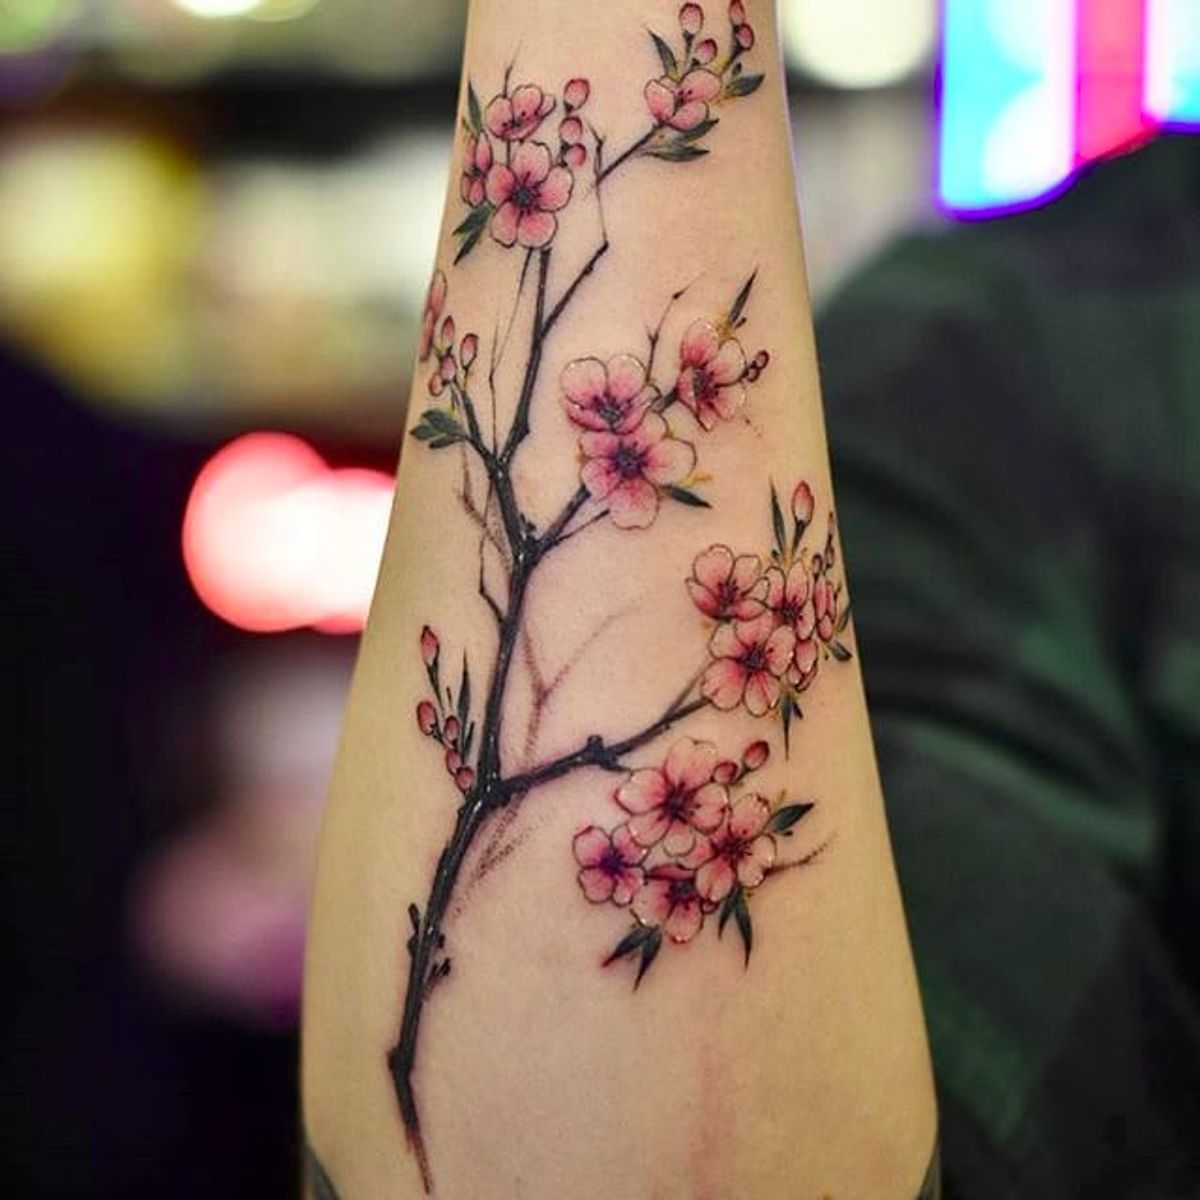 Tattoo uploaded by Servo Jefferson • More cherry blossoms by Drag (via ...